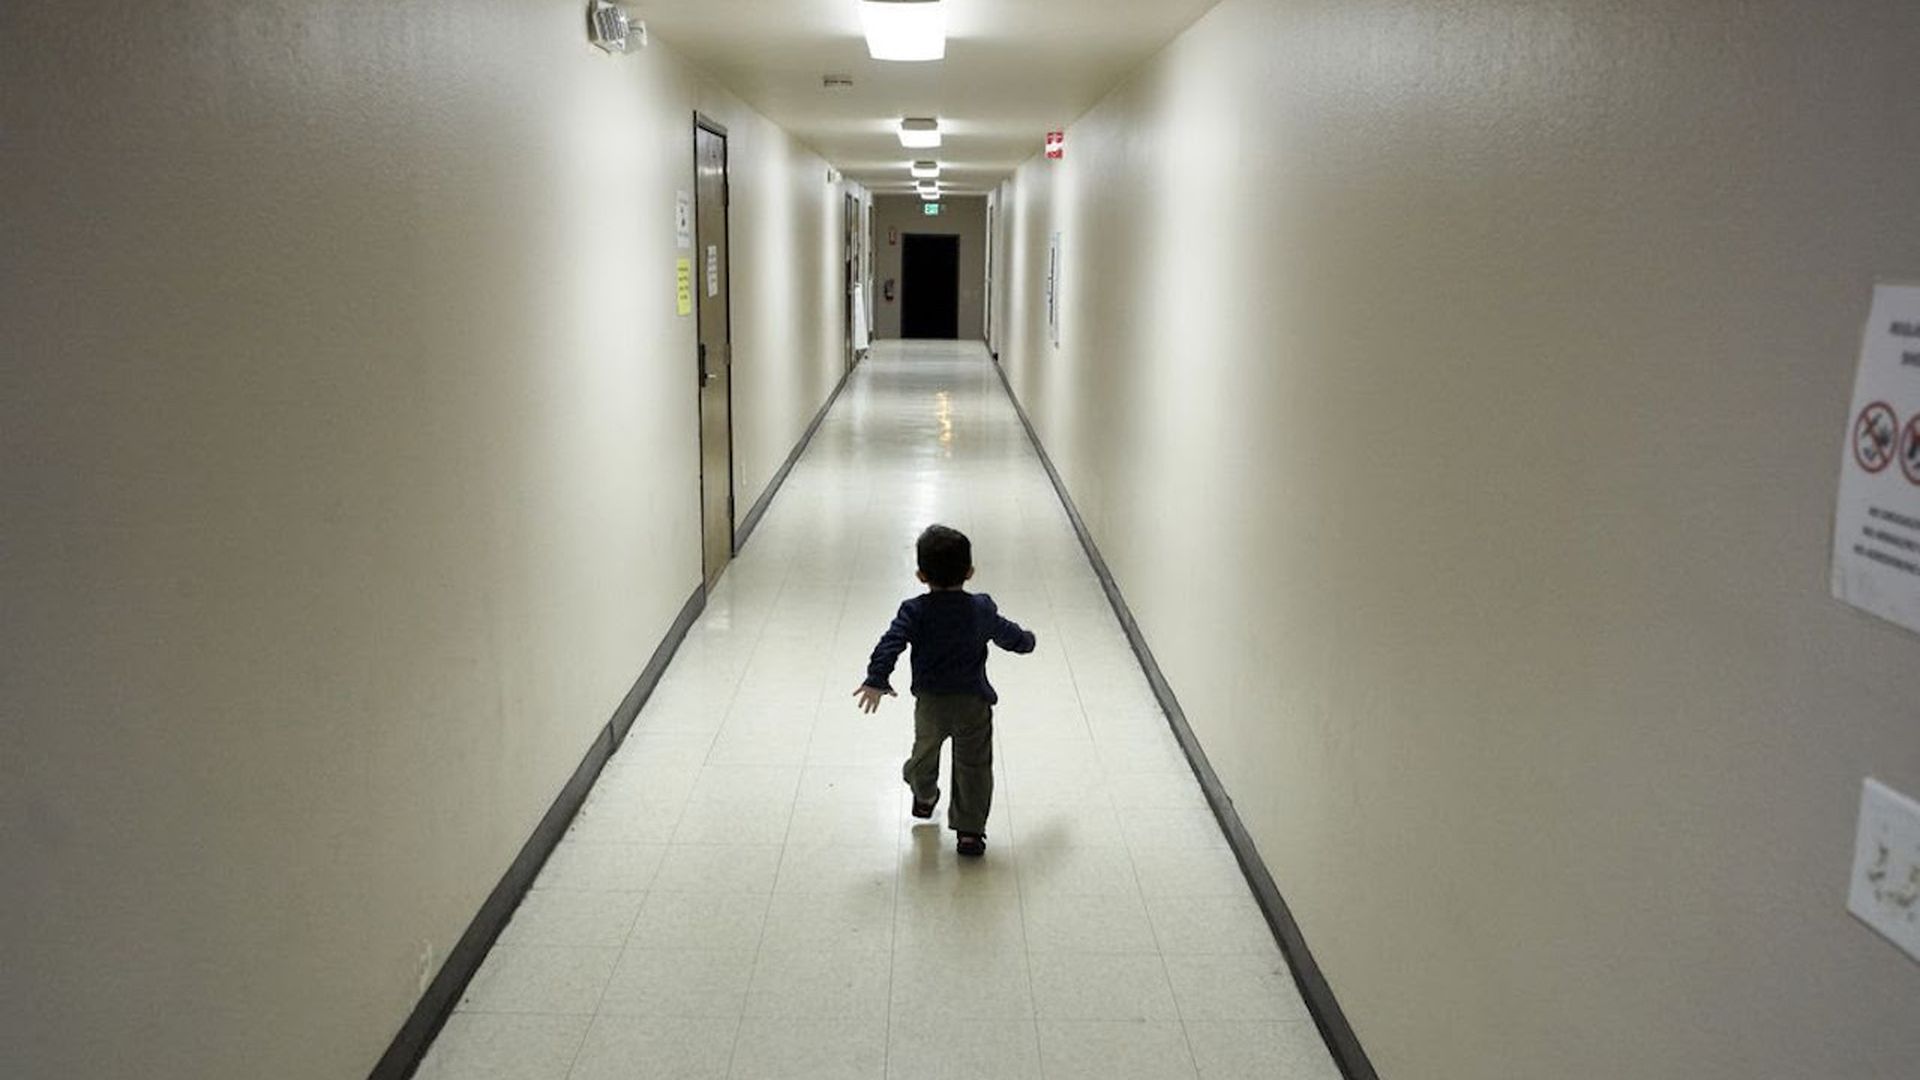 A child running down an empty hallway